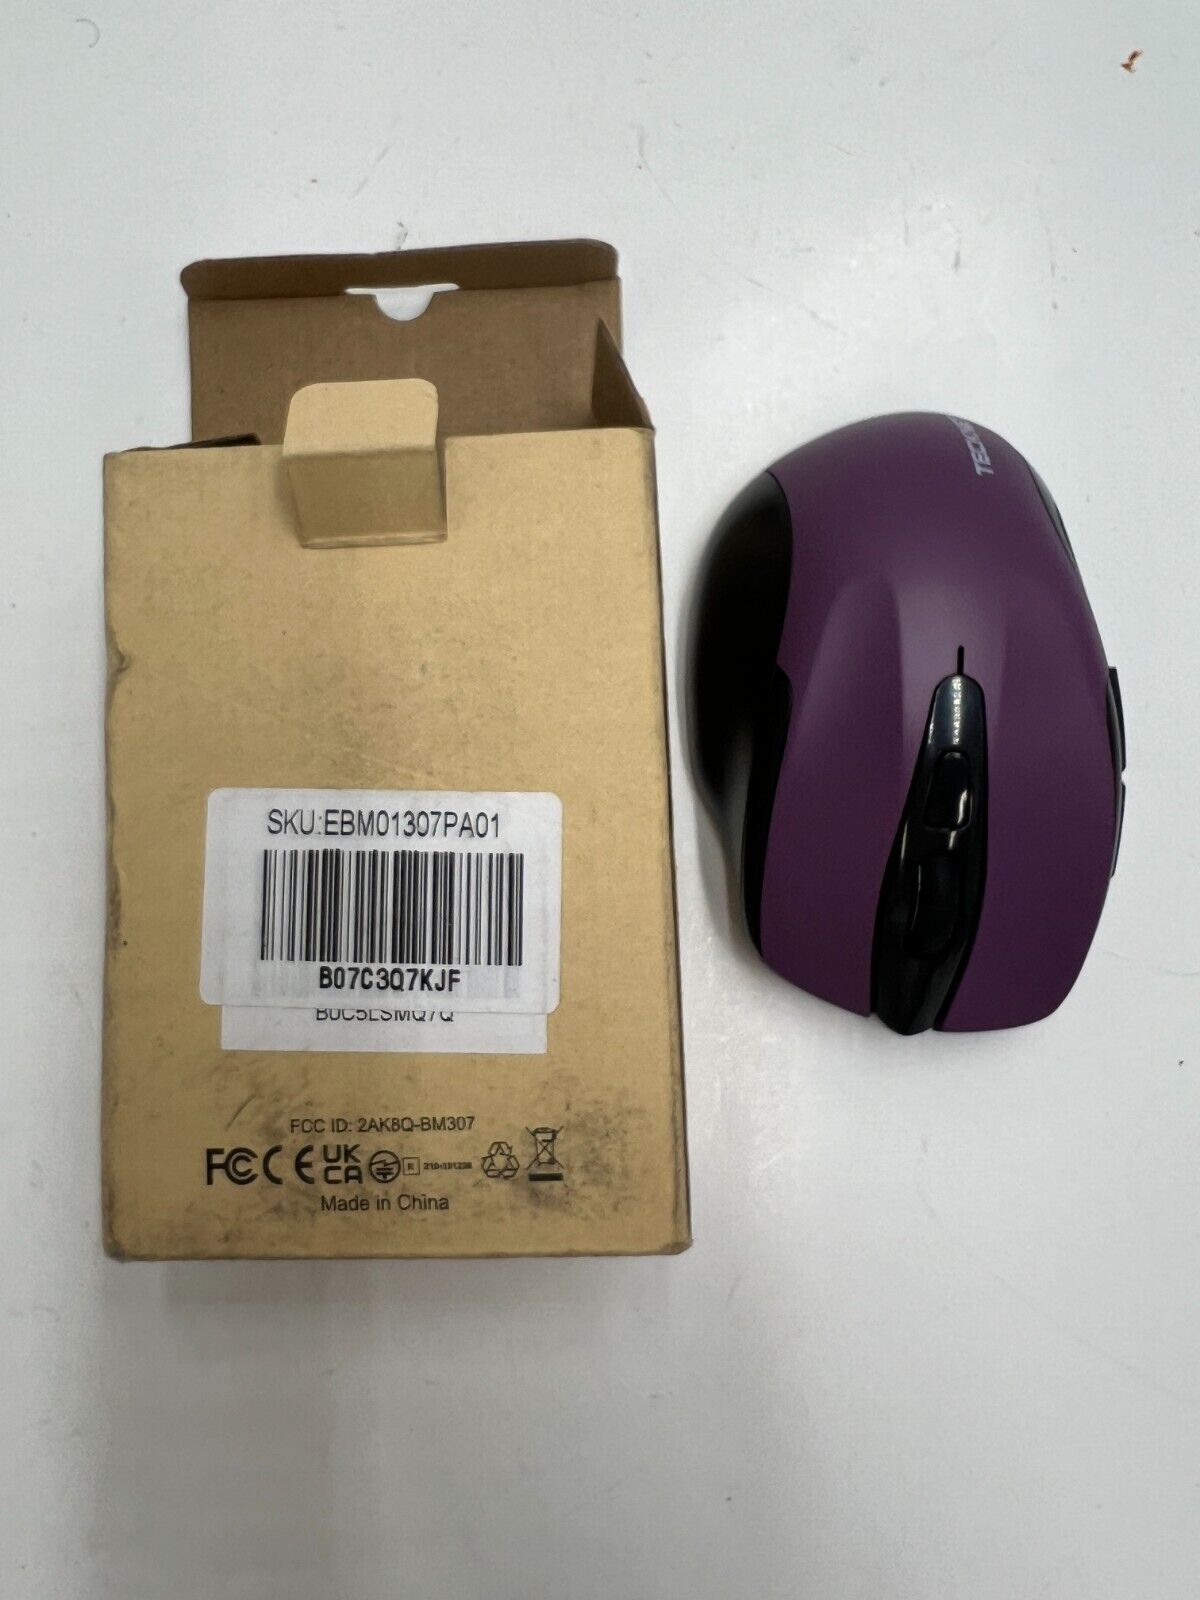 Tecknet Cordless Bluetooth Wireless Optical Computer Mouse Model BM307 PURPLE